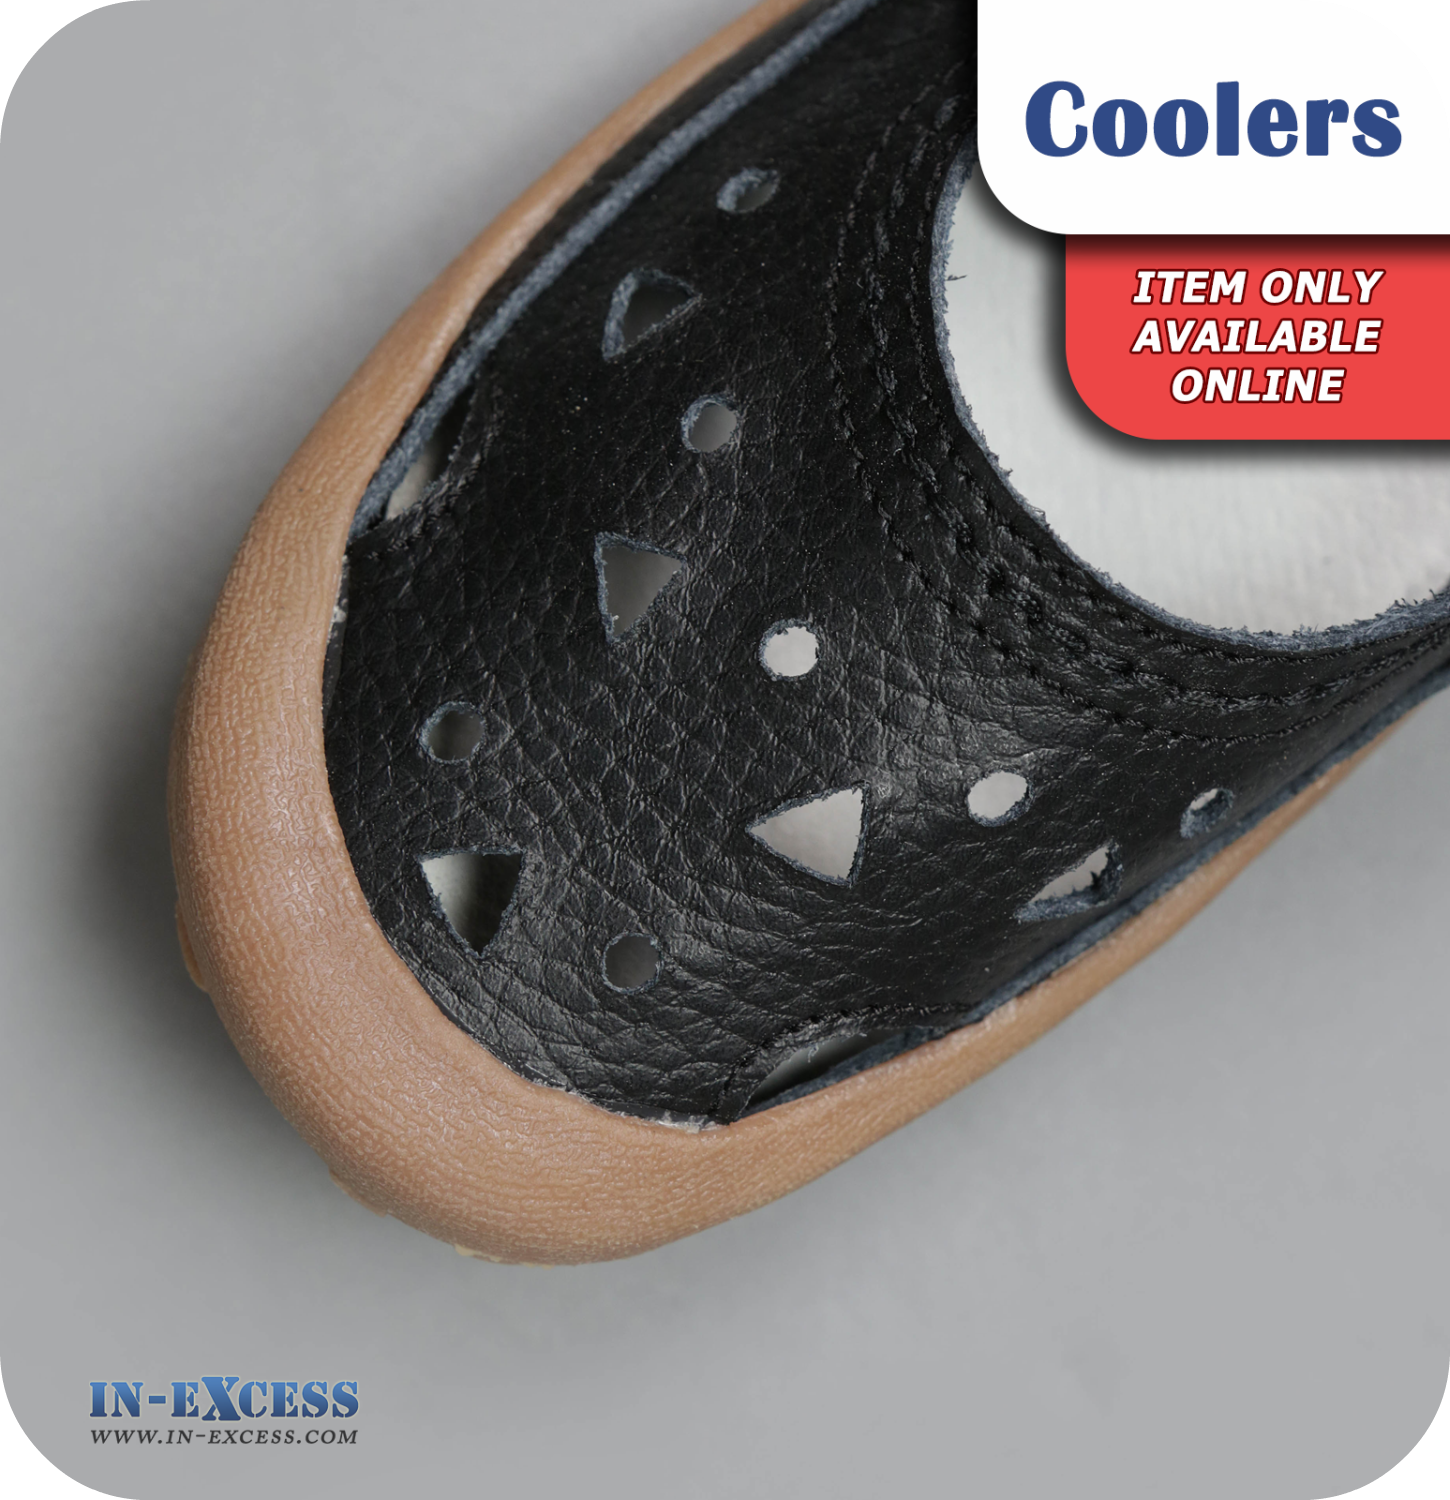 Coolers Premier Leather Sandals - Black